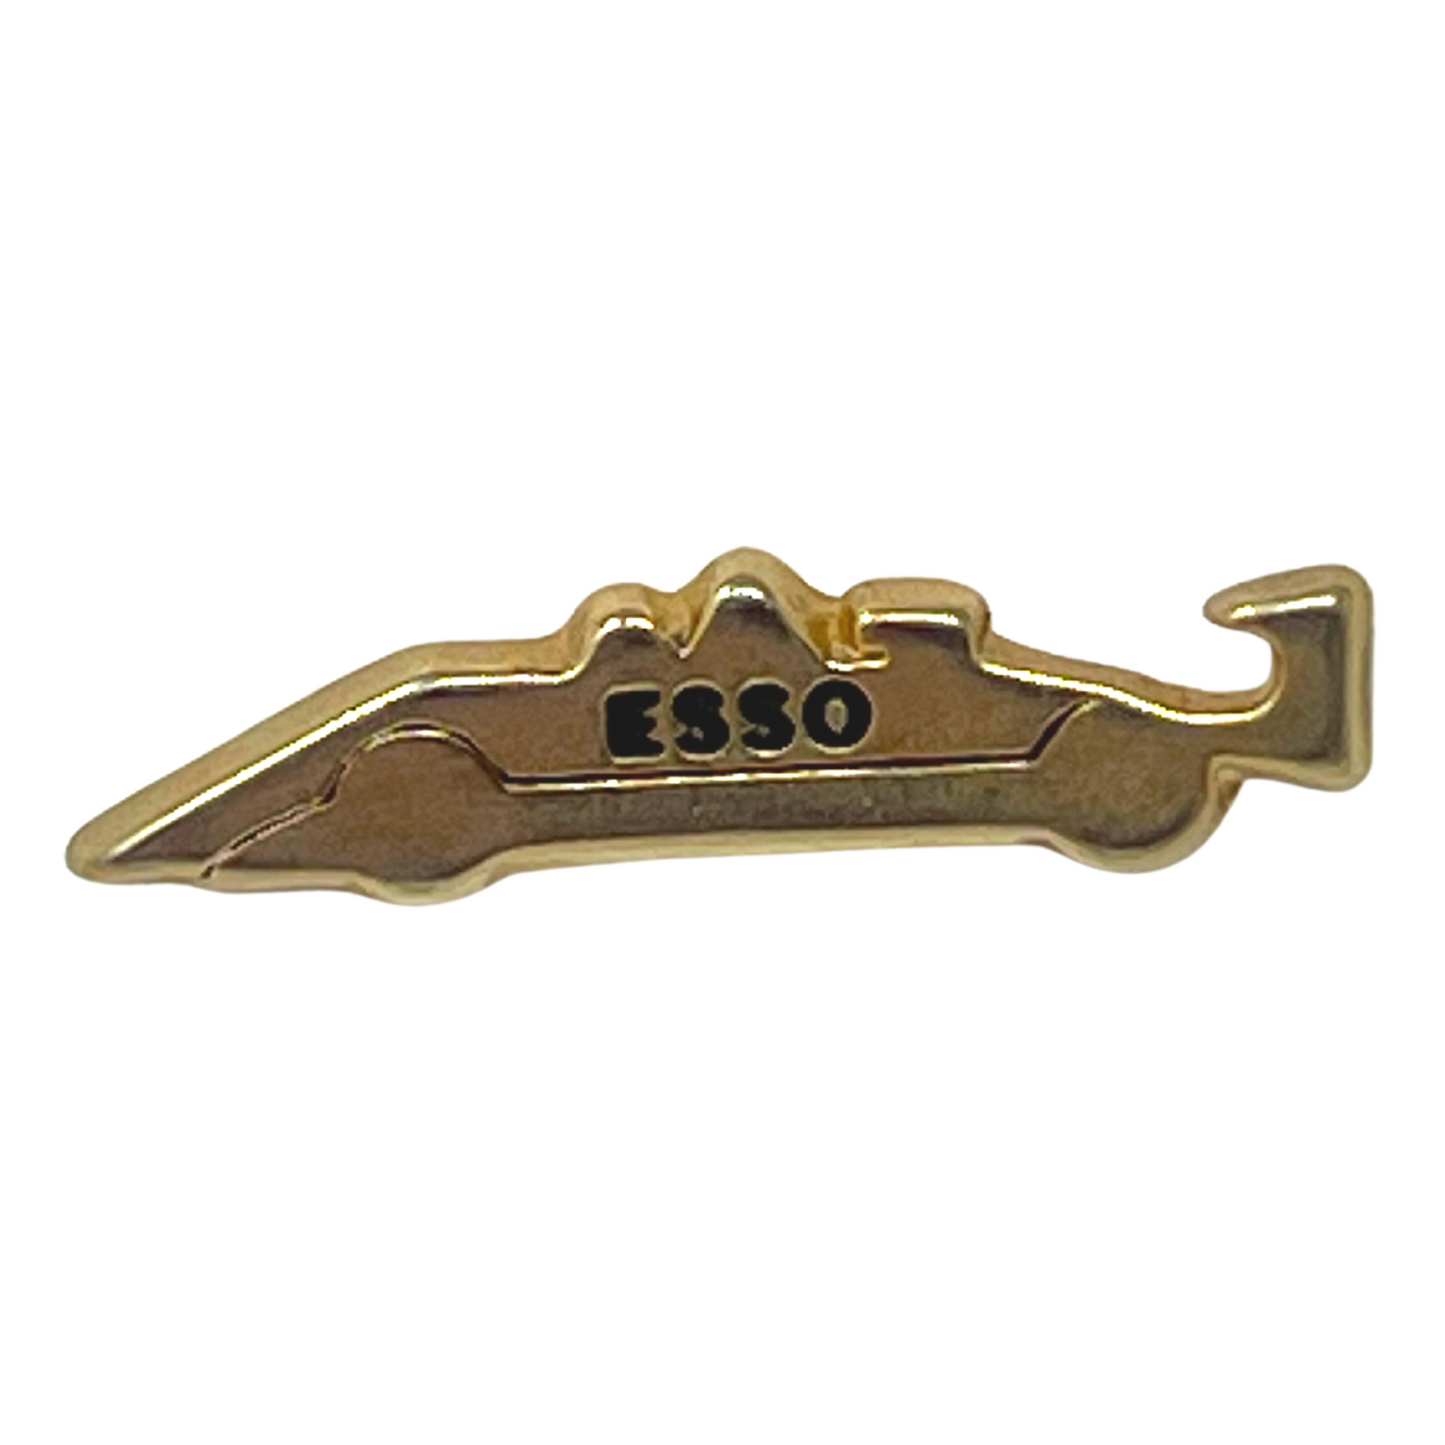 Esso Race Car Gas & Oil Lapel Pin